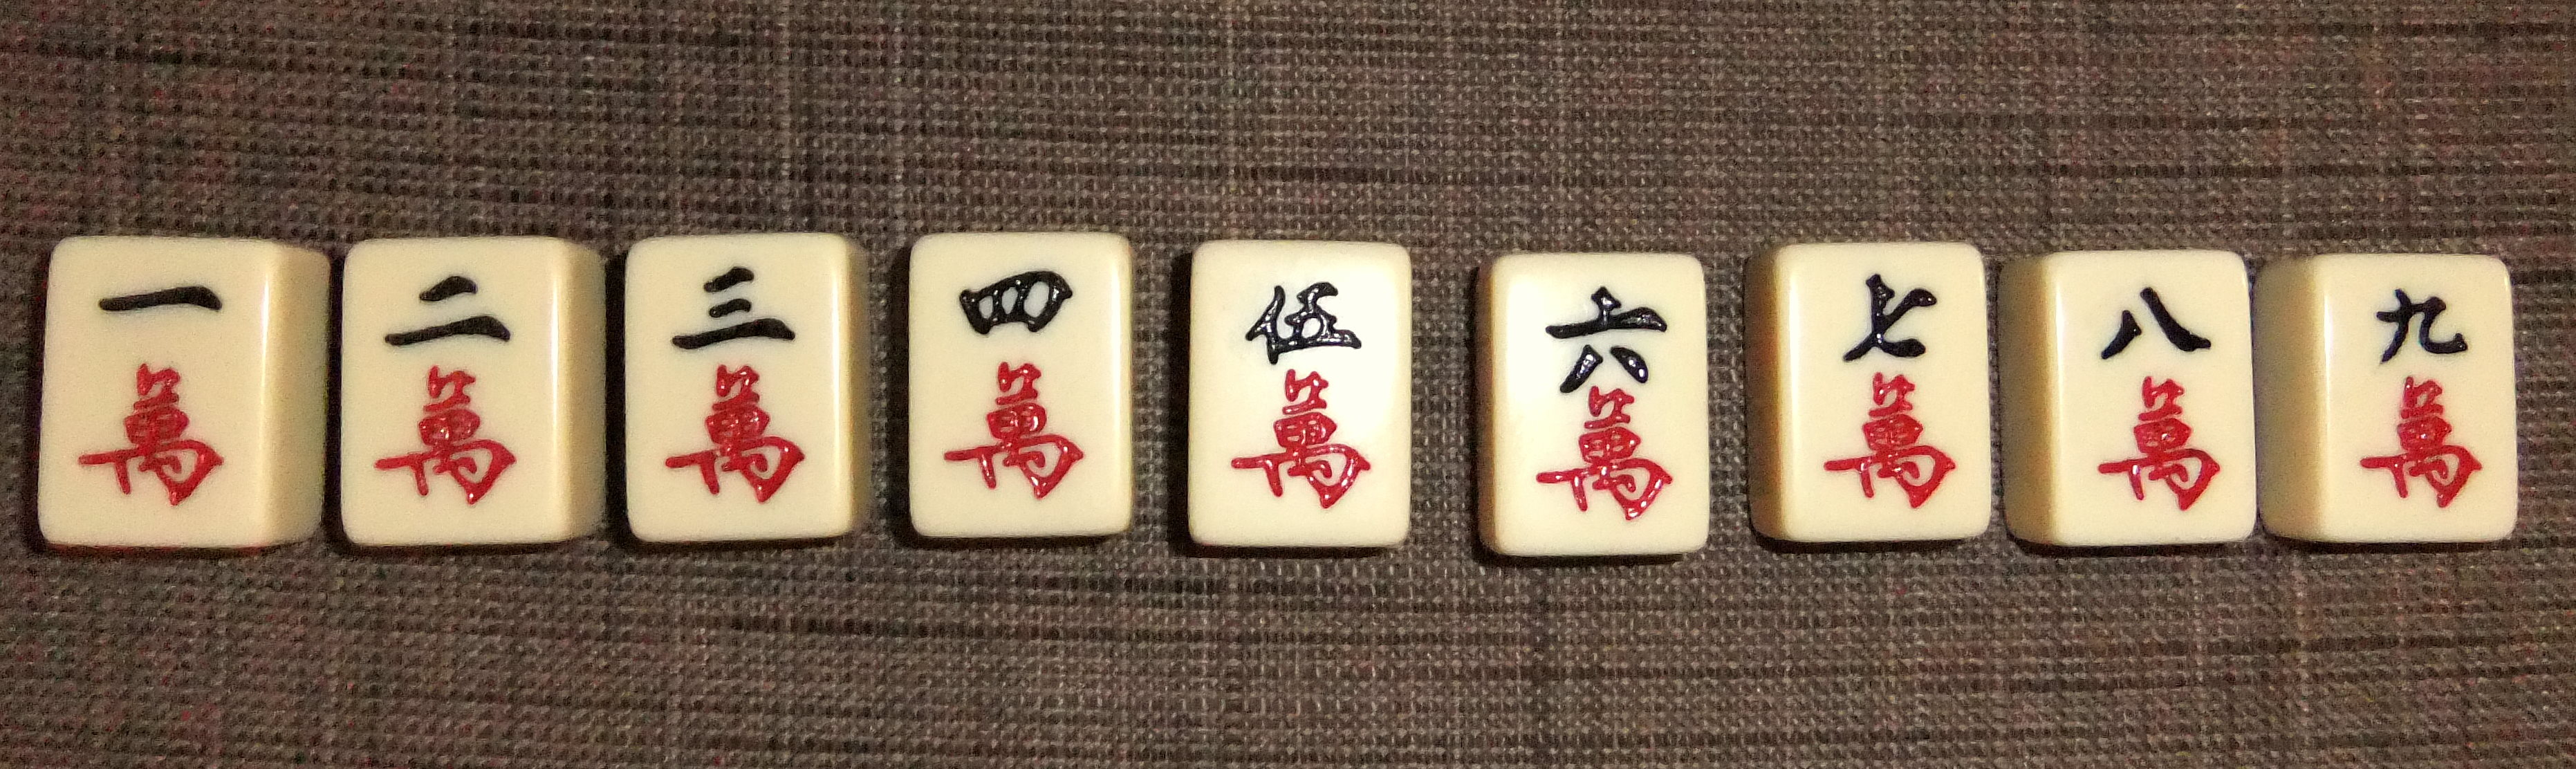 mahjong-tiles-10000-characters.jpg